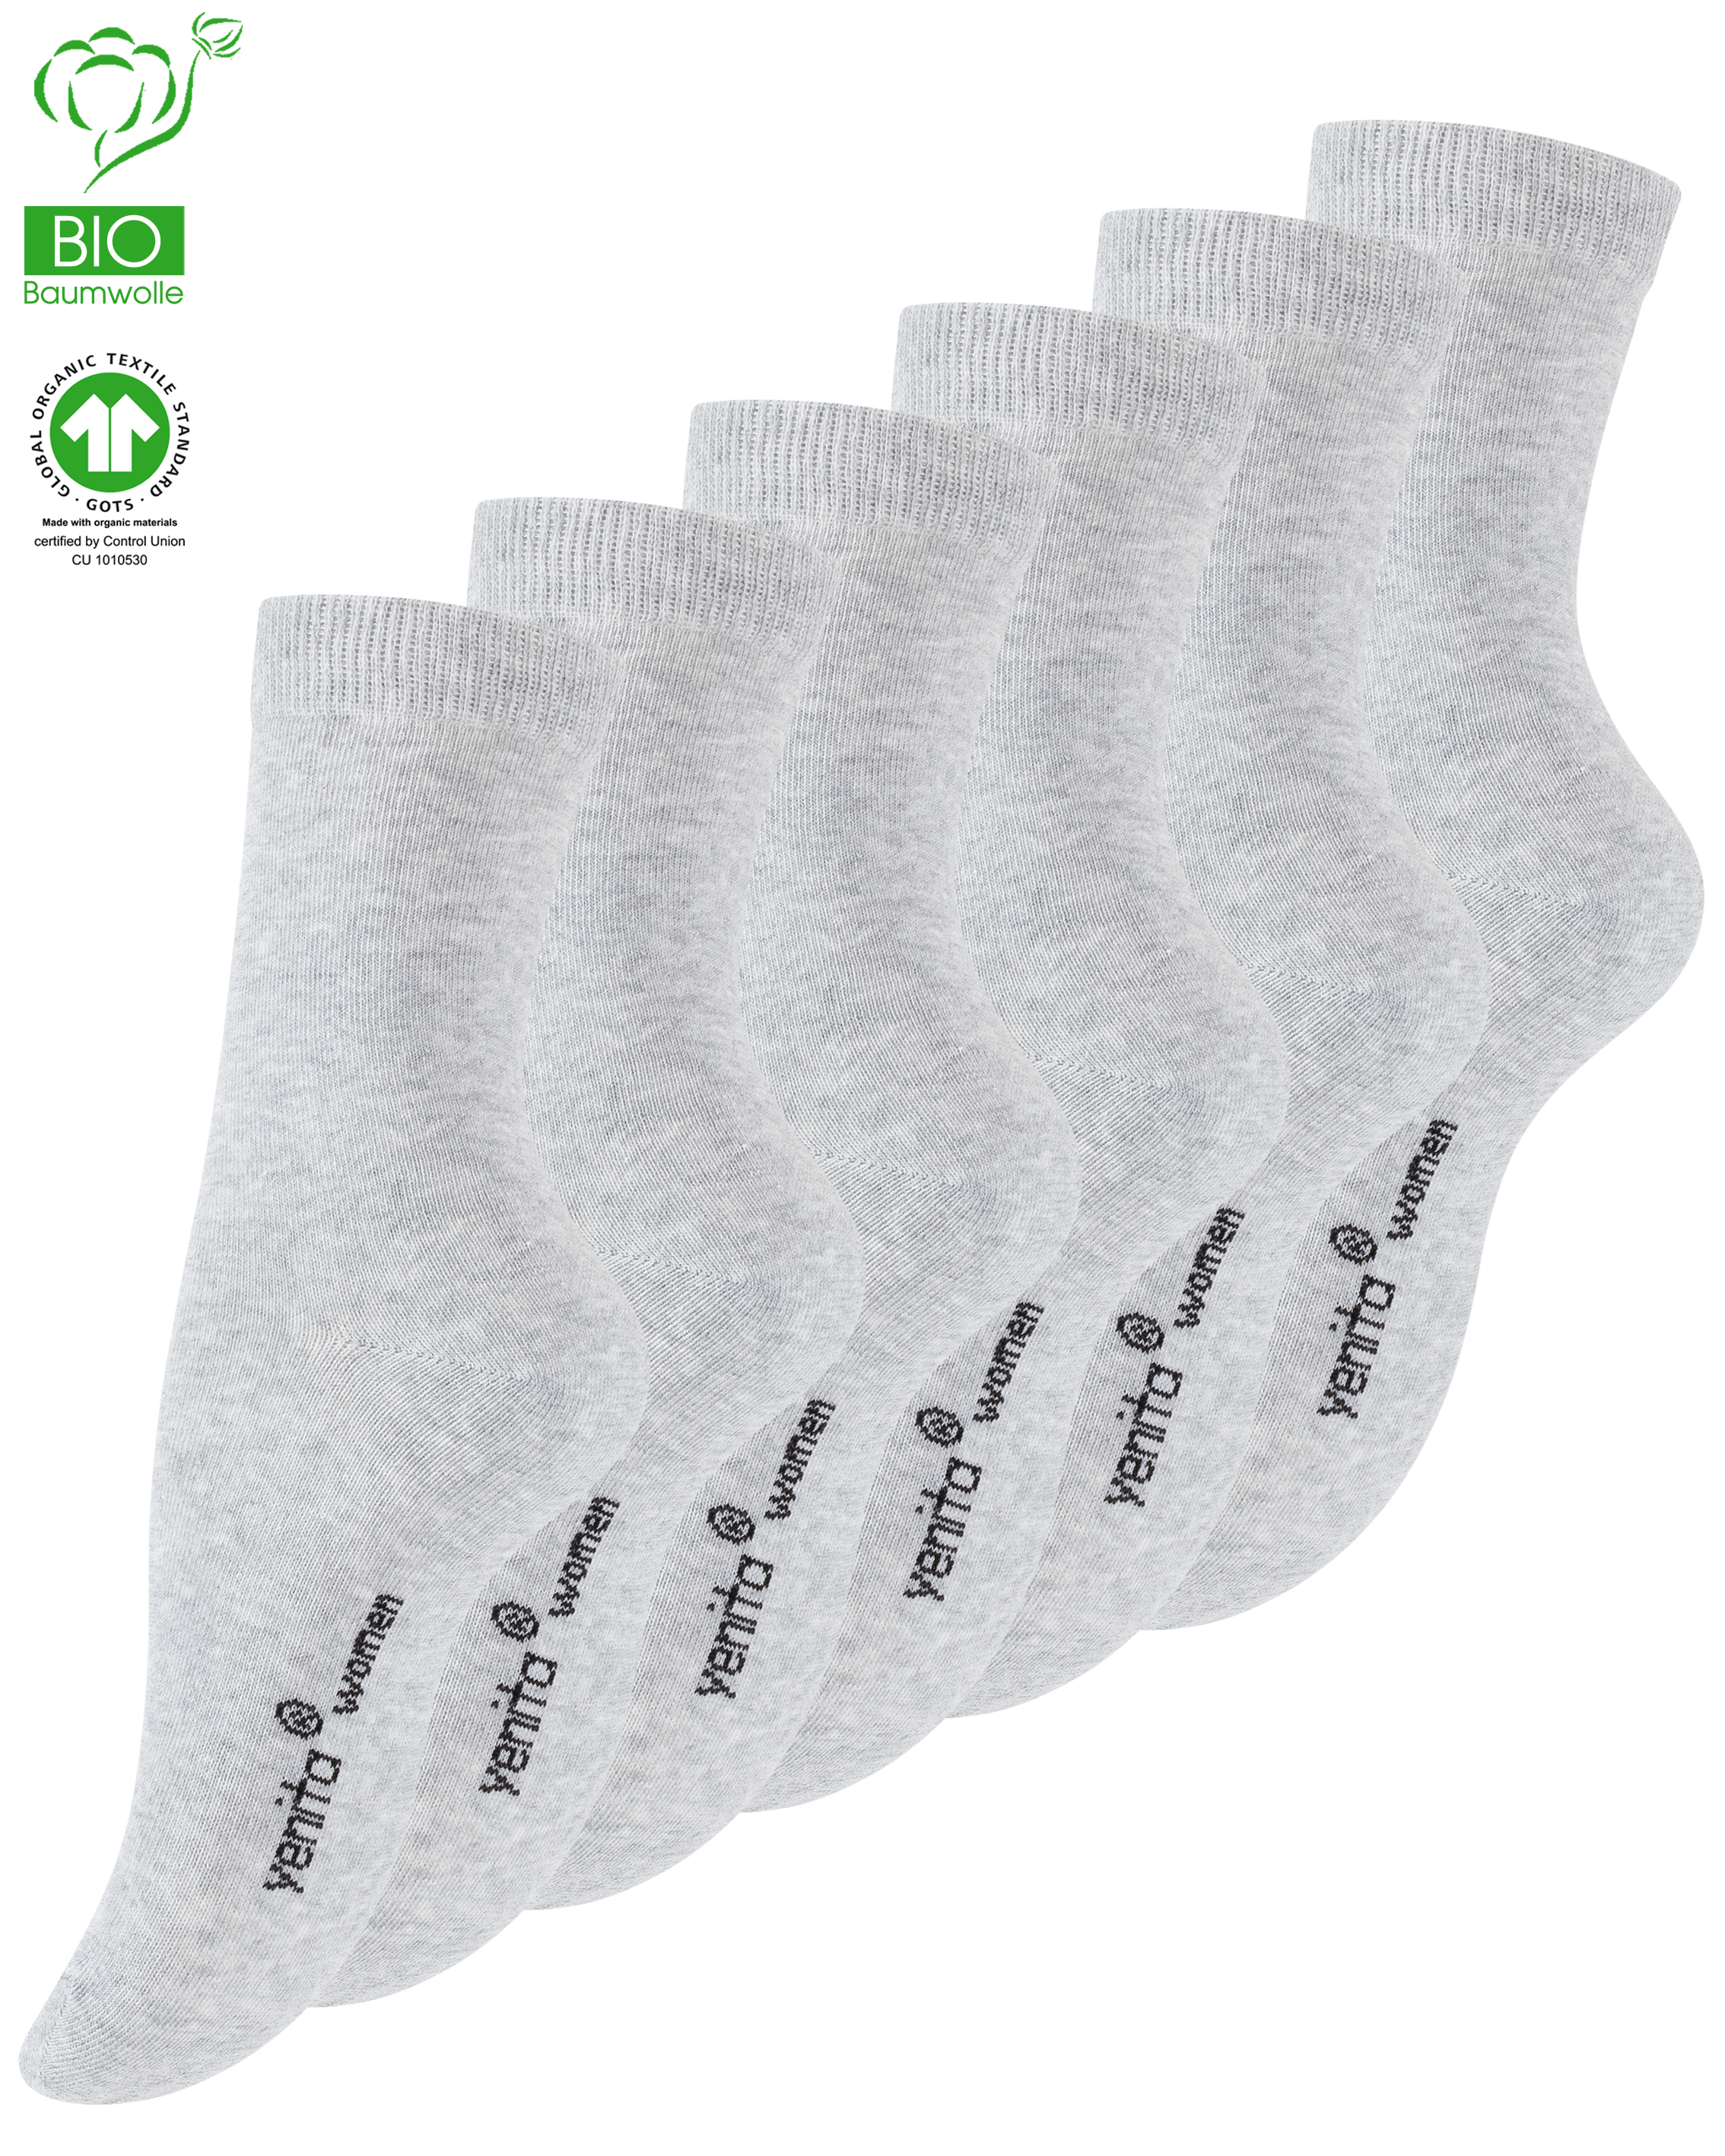 Носки Yenita Bio Baumwoll 6 шт, серый